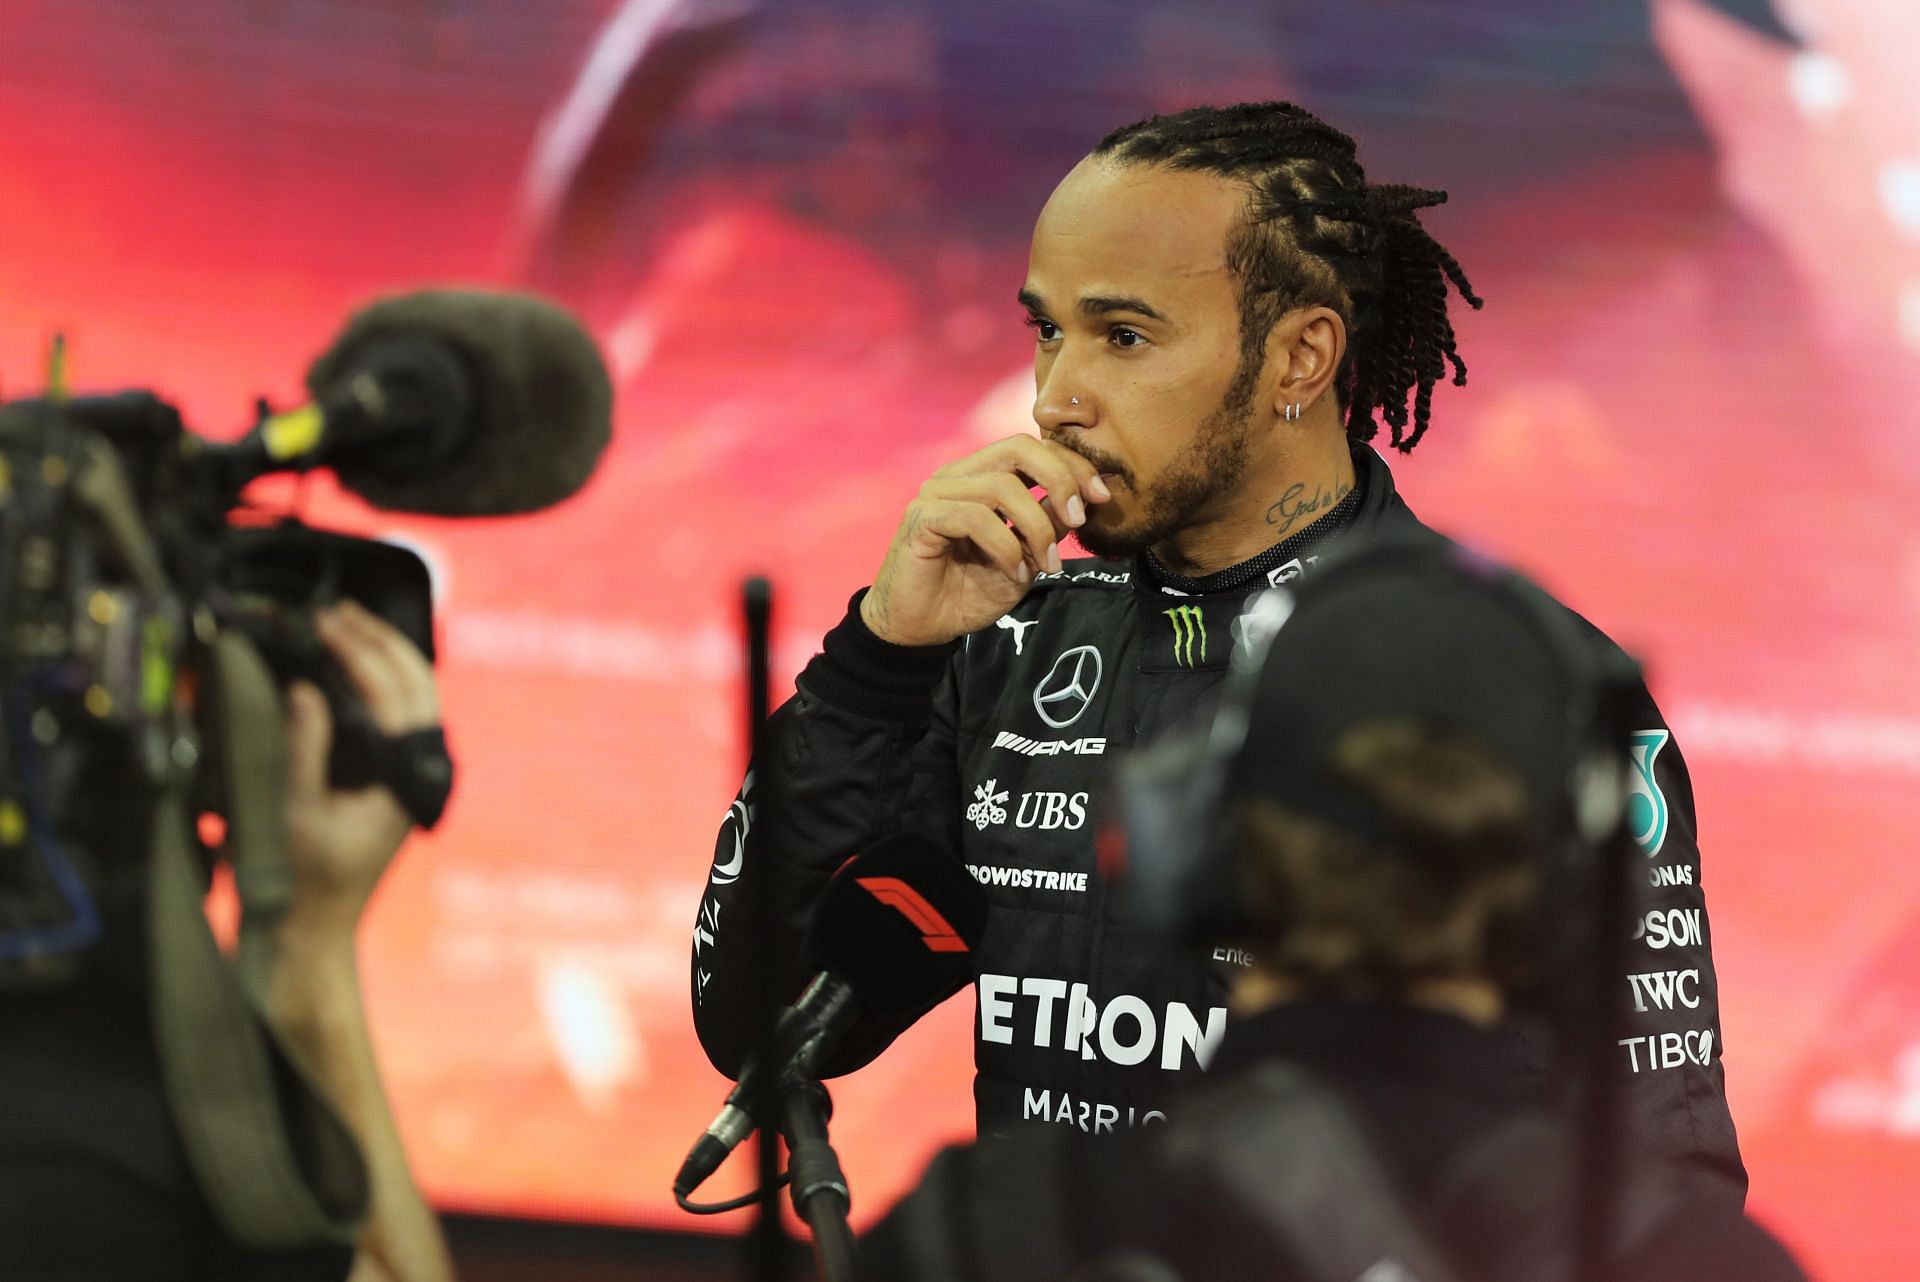 Lewis Hamilton. (Photo by Kamran Jebreili - Pool/Getty Images)